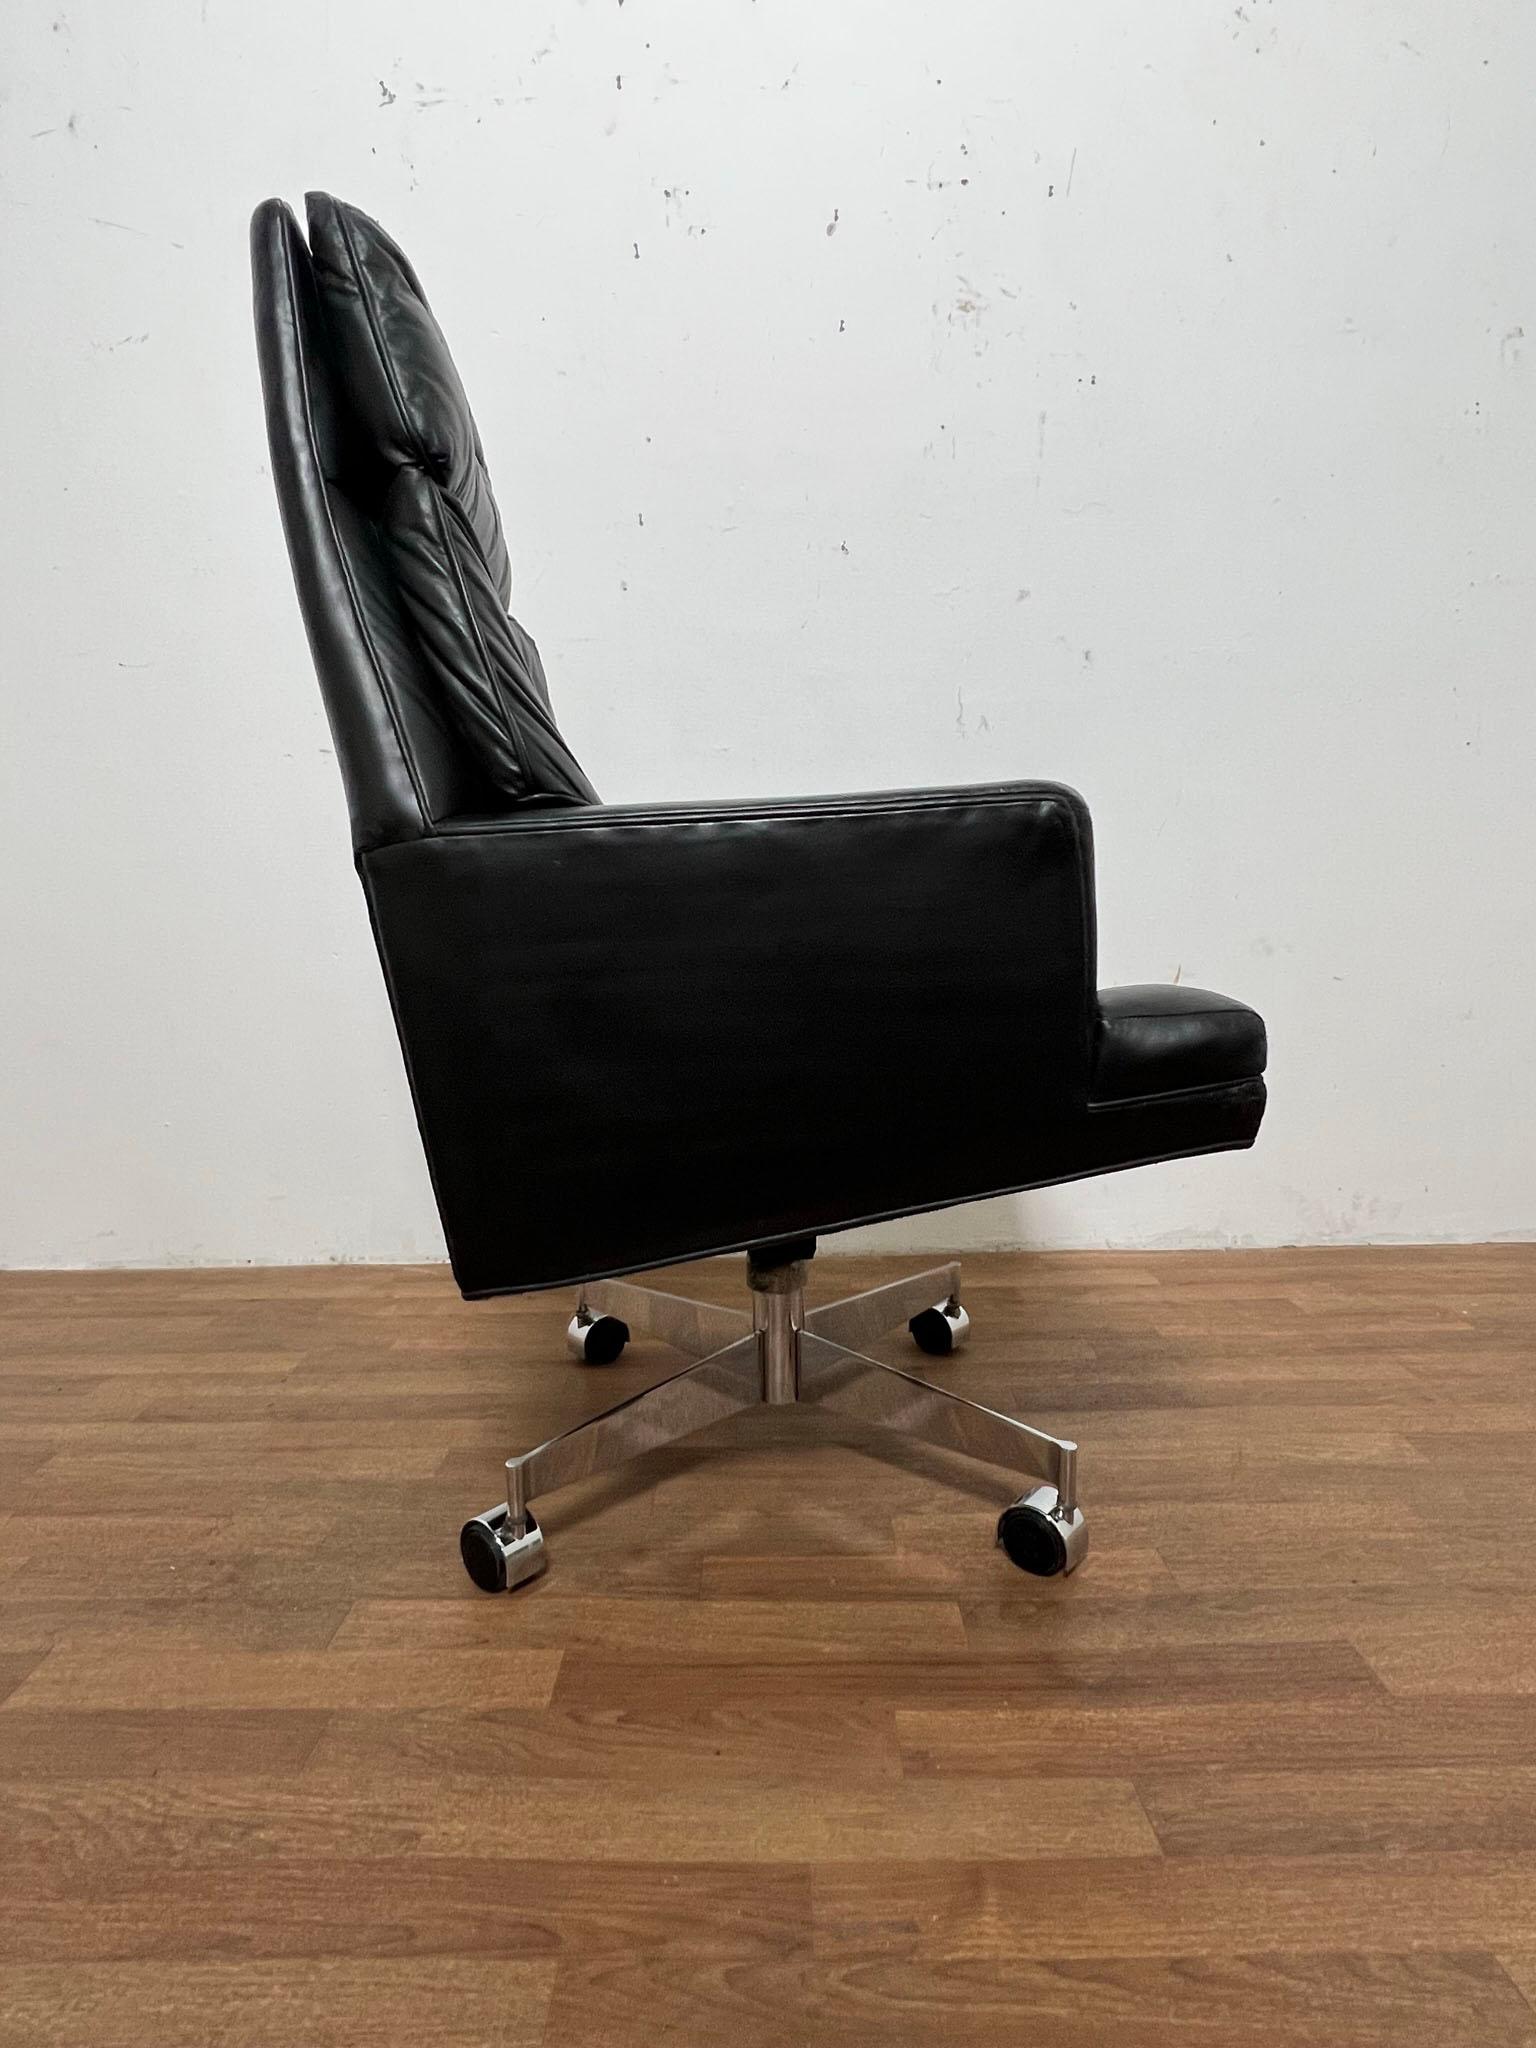 Leather executive swivel desk chair by Edward Wormley for Dunbar, circa 1950s.